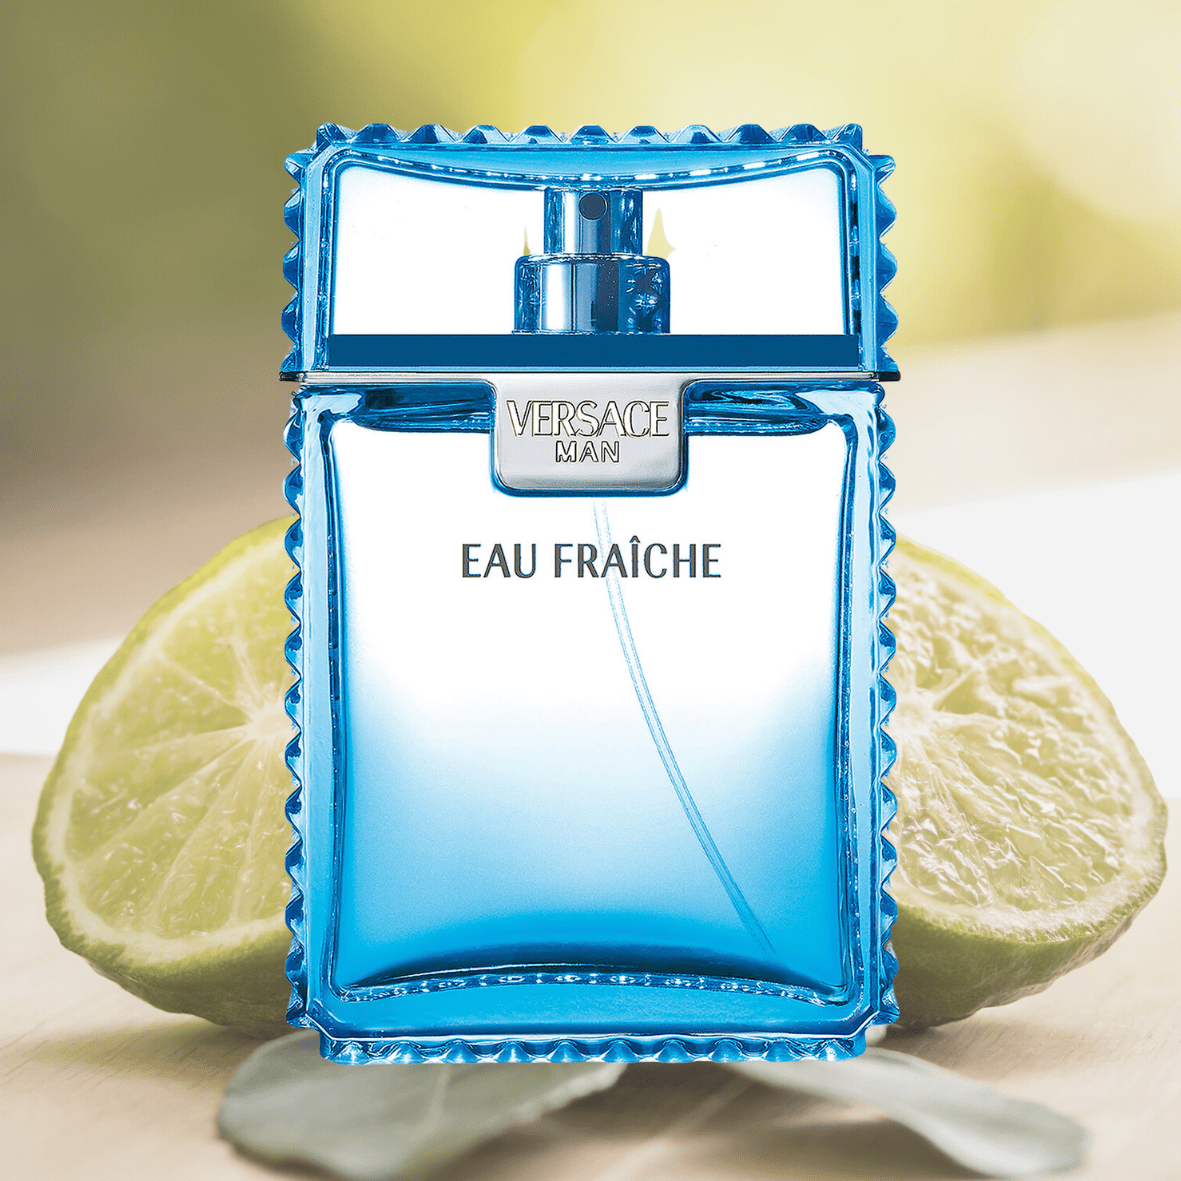 Best Bergamot Fragrances For Men & Women
Versace Man Eau Fraiche